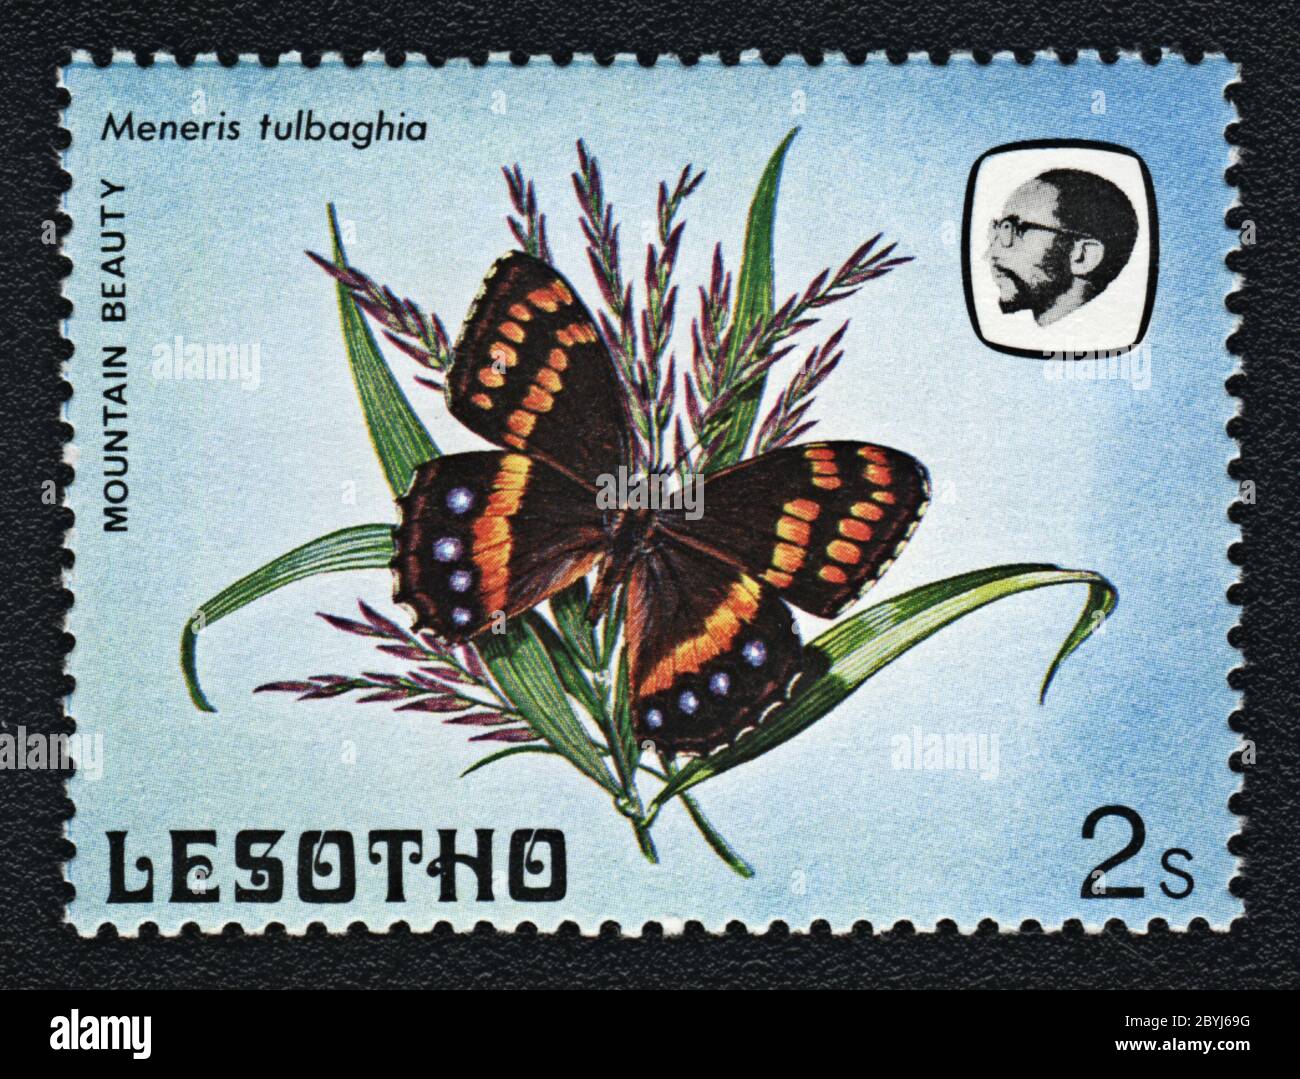 Belleza de la montaña, Meneris tulbaghia. Estampillas postales serie Mariposas, Lesotho,1984 Foto de stock